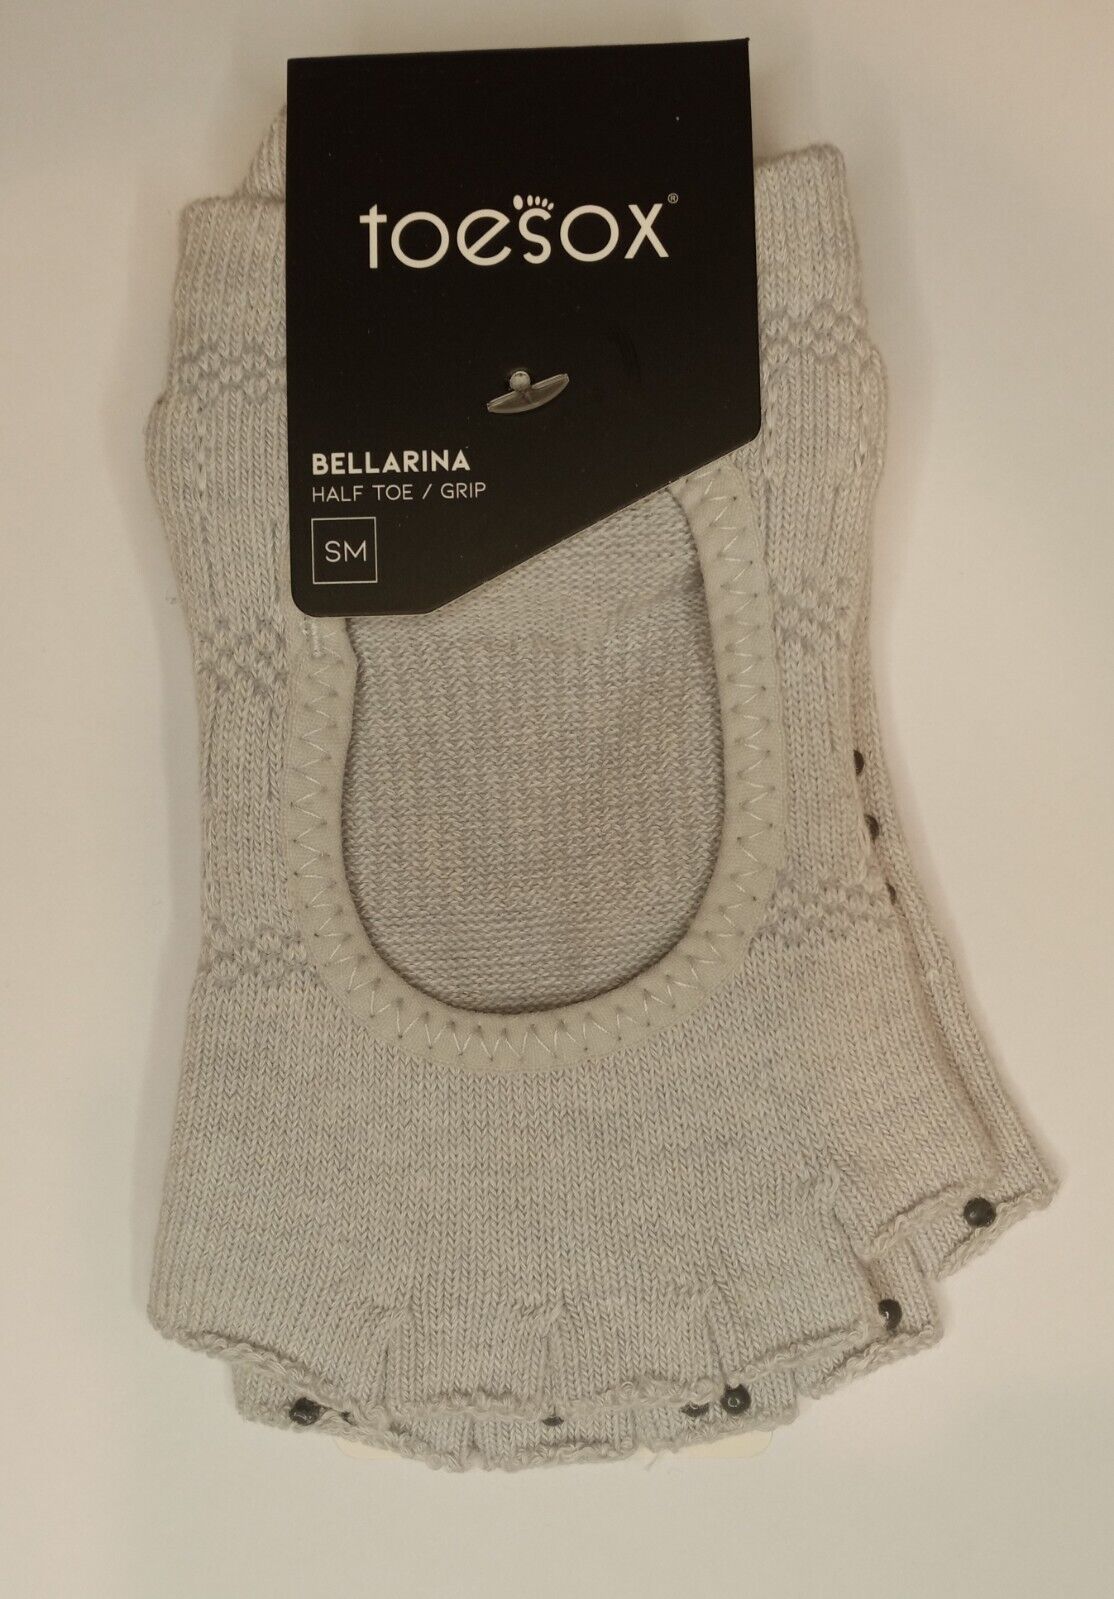 Toesox Bellarina Half Toe Grip Socks Size Small NEW Color Ciao Pilates Yoga...